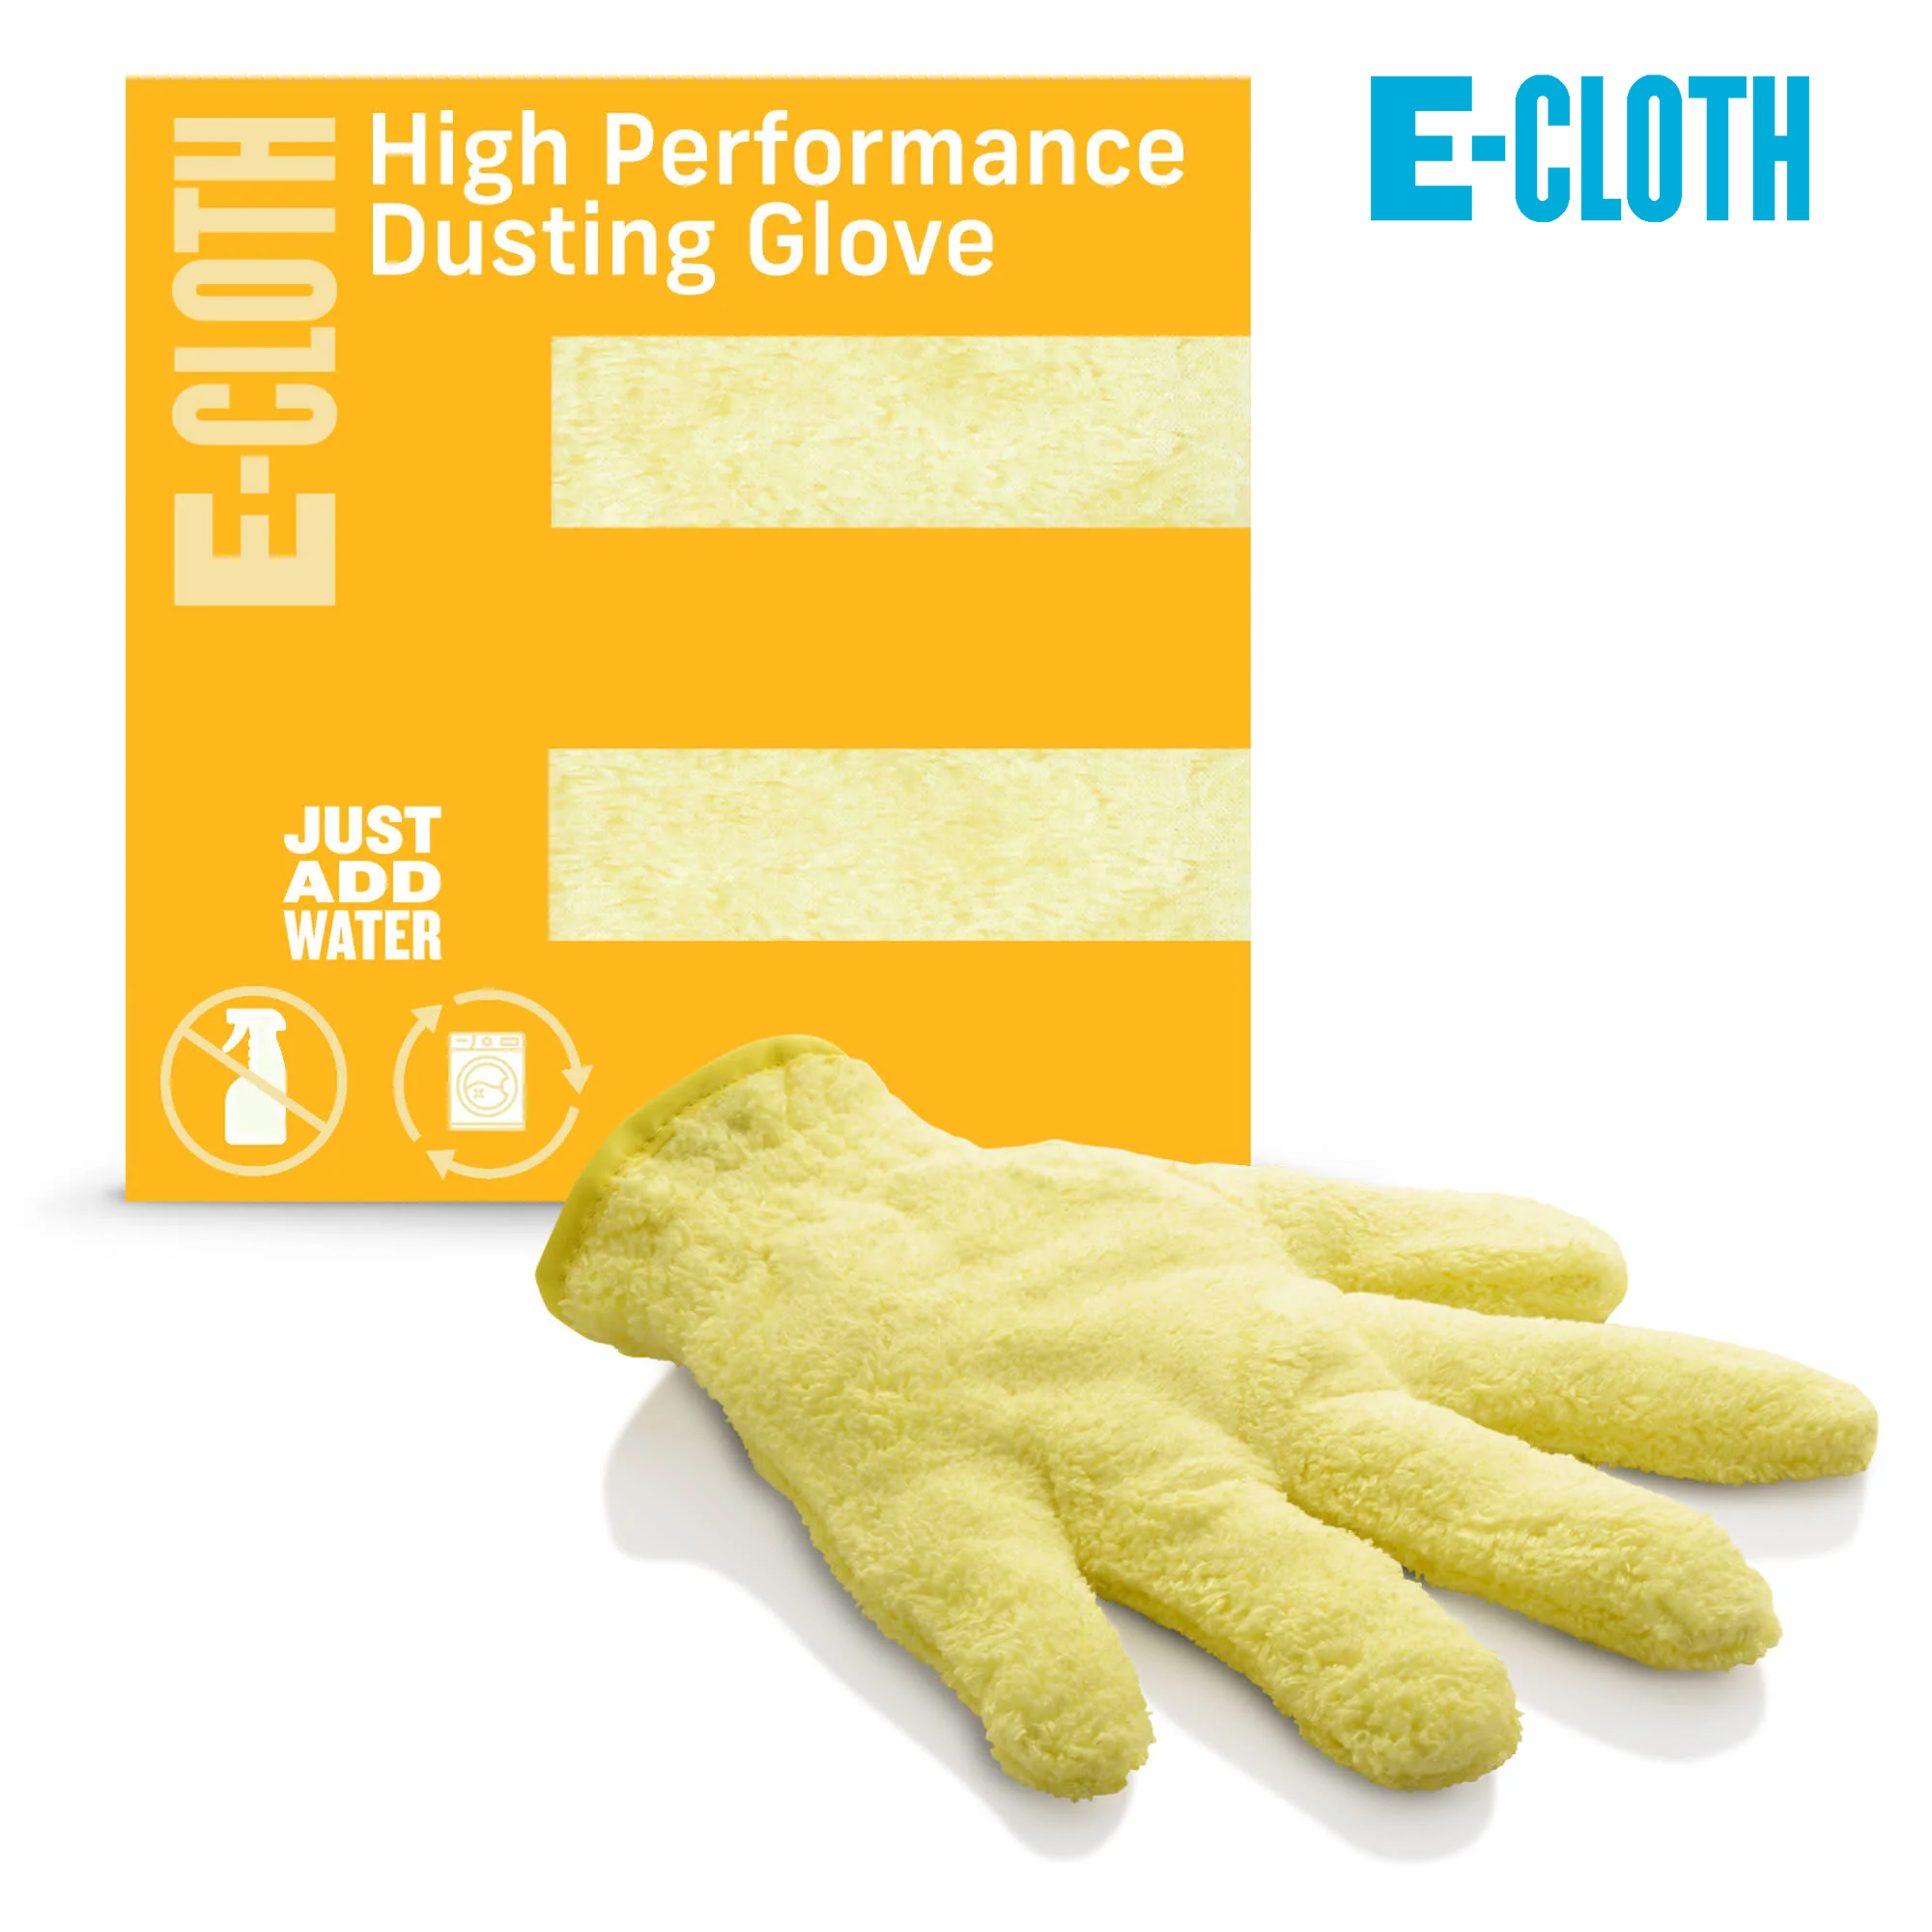 High Performance Dusting Glove